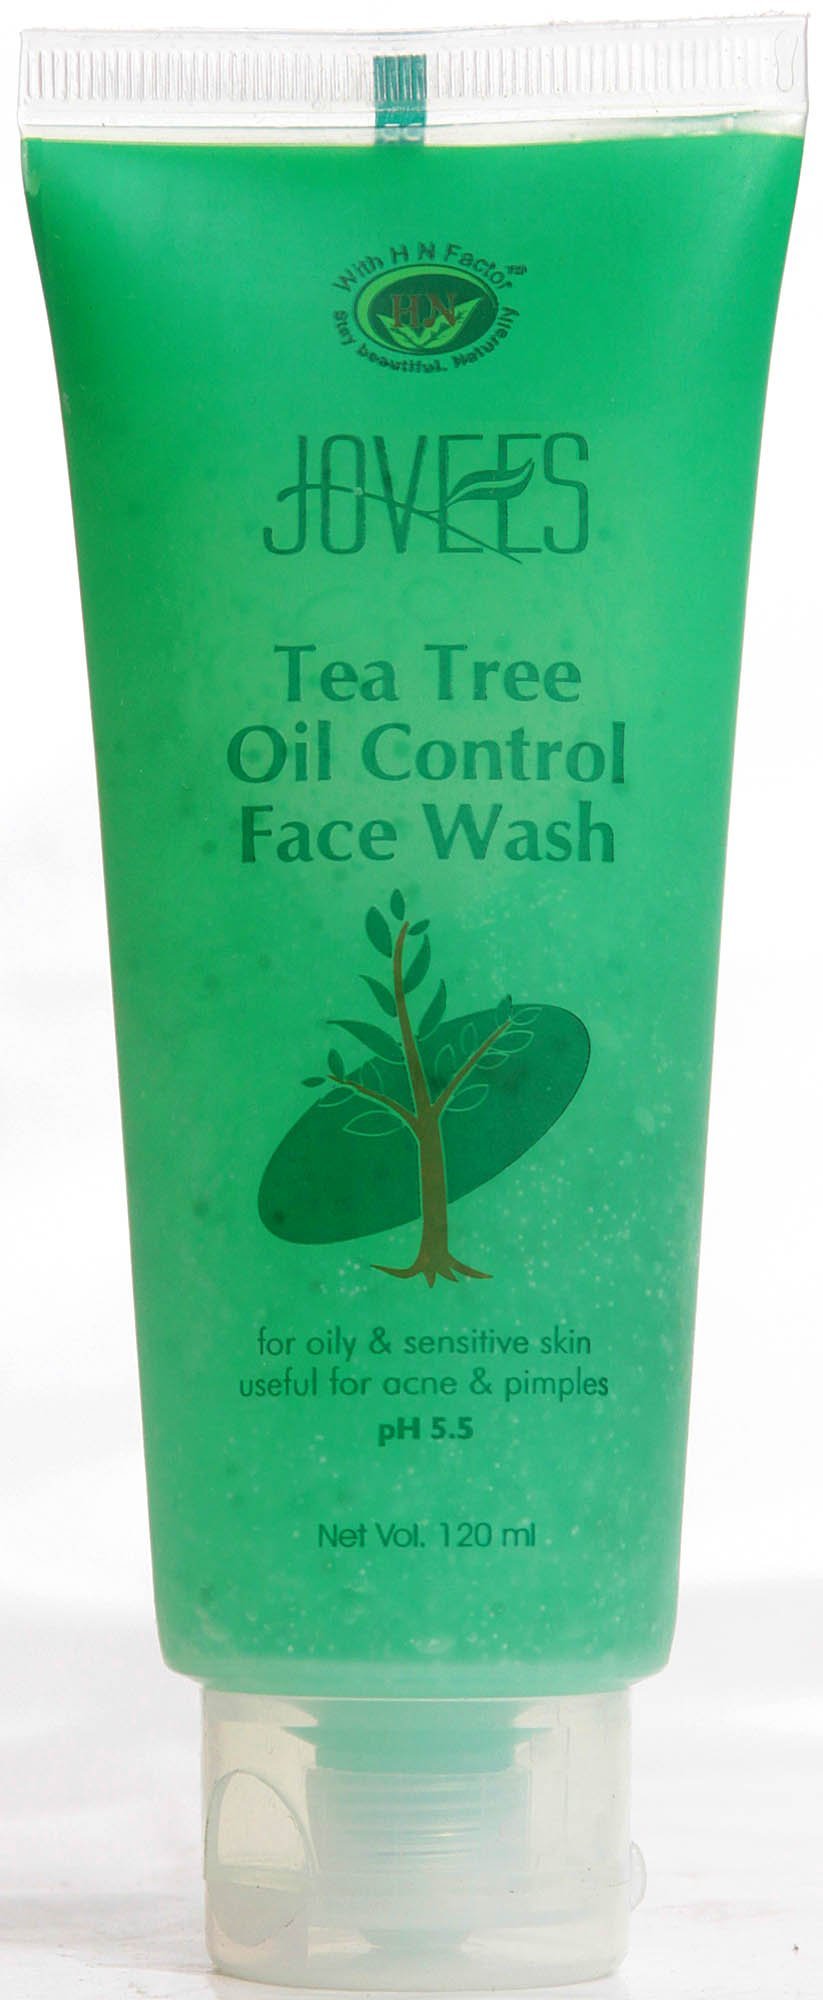 Tea Tree Oil Control Face Wash - book cover